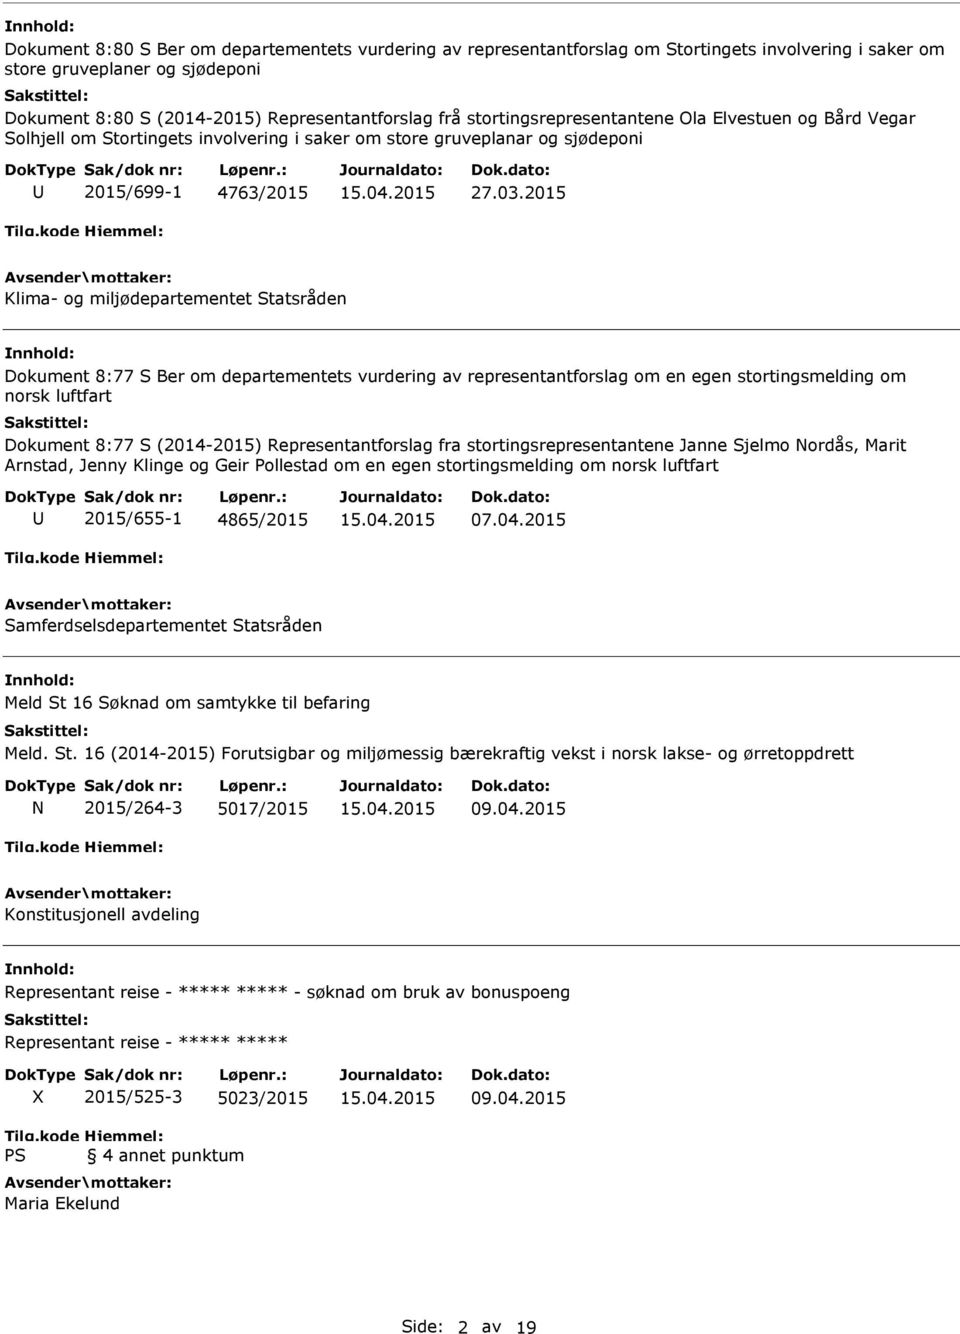 2015 Klima- og miljødepartementet Statsråden Dokument 8:77 S Ber om departementets vurdering av representantforslag om en egen stortingsmelding om norsk luftfart Dokument 8:77 S (2014-2015)